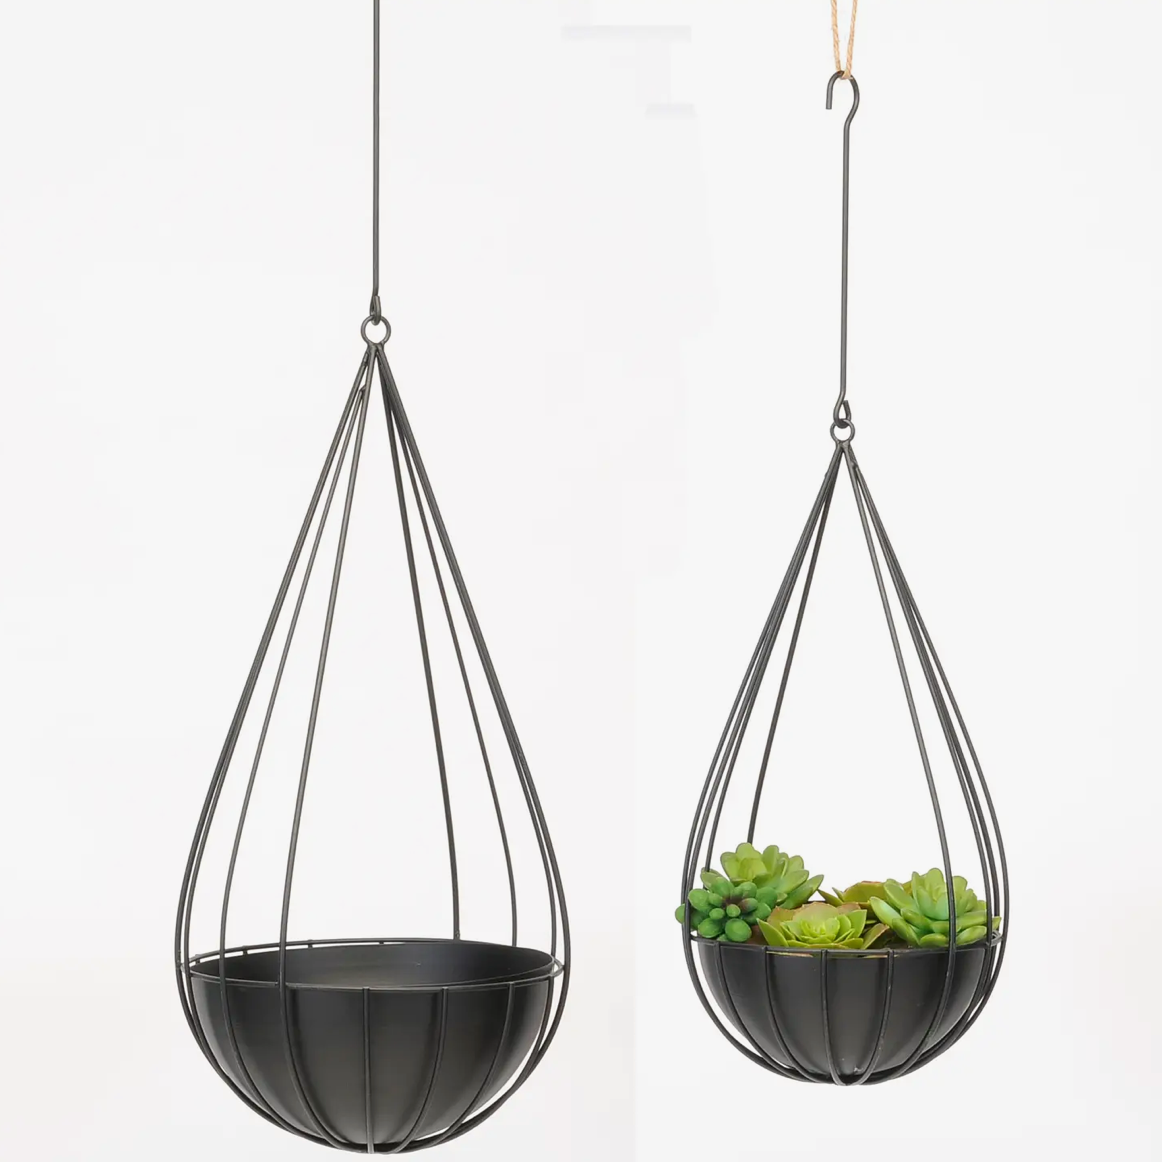 hanging plant bowls